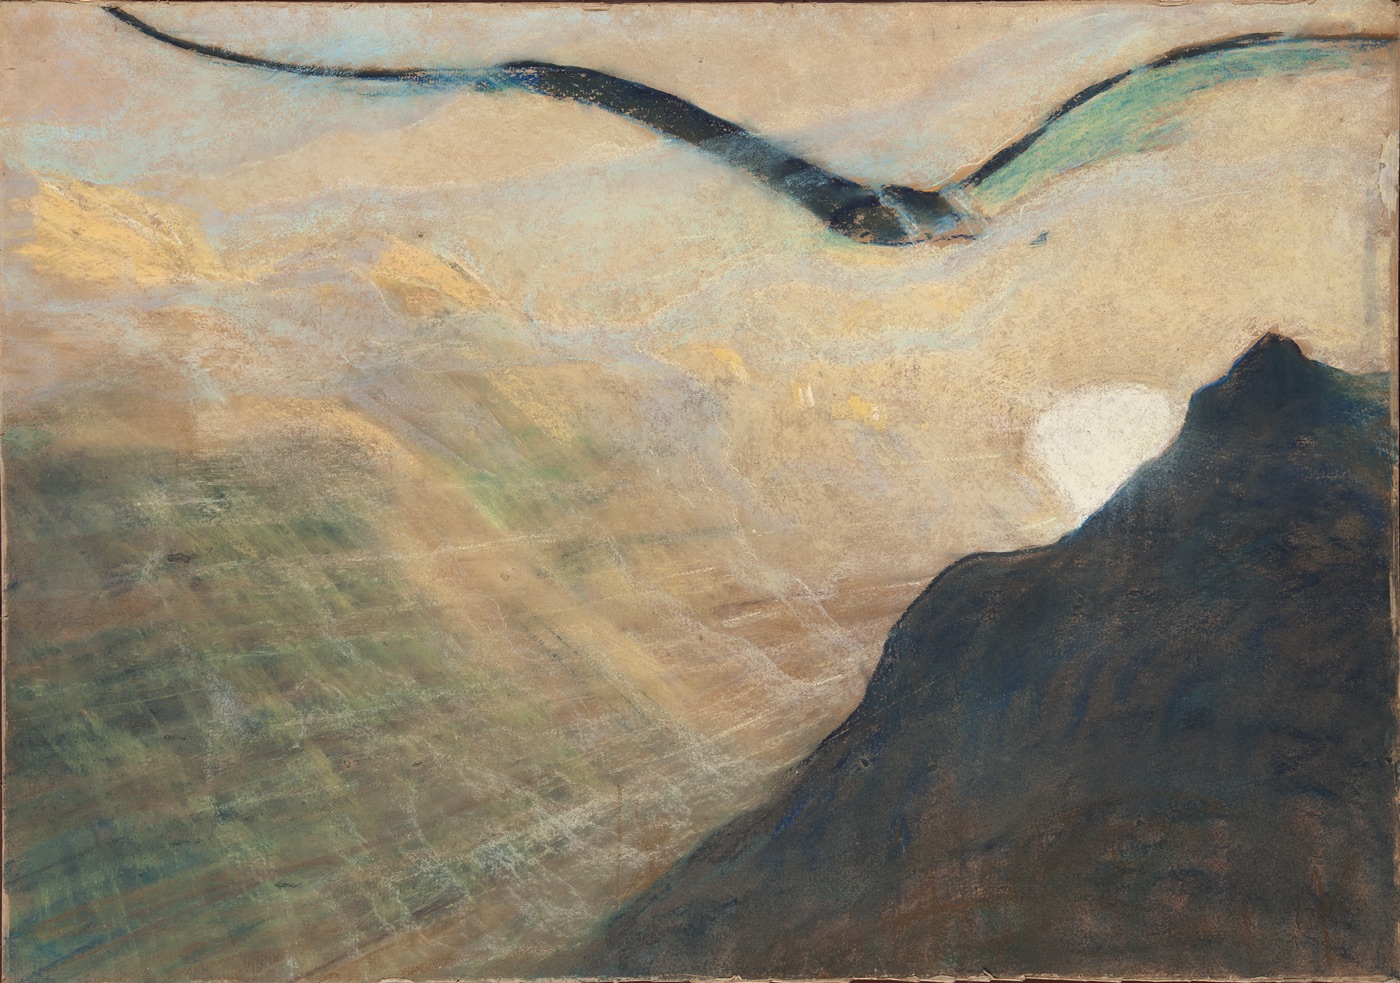 Hír by Mikalojus Konstantinas Čiurlionis - 1905 - 29,6 x 21,3 cm 